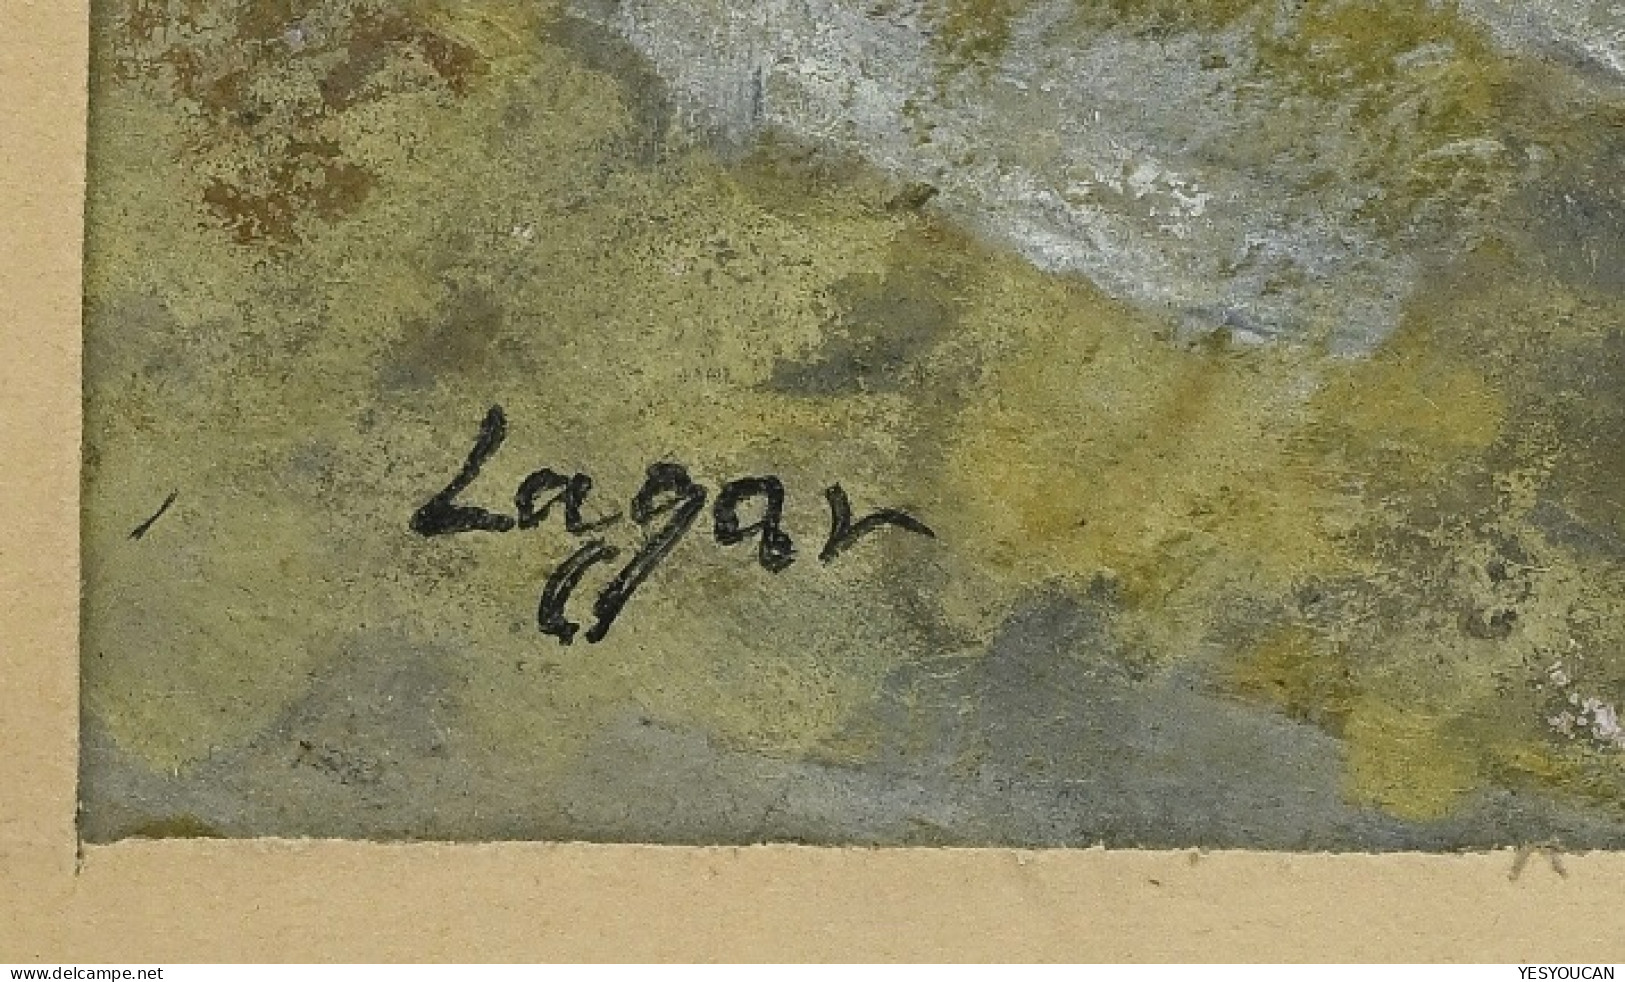 CELSO LAGAR (1891Ciudad Rodrigo España-1966Sevilla)Corrida De Toros (Modigliani Spanish Expressionist Art école De Paris - Waterverf